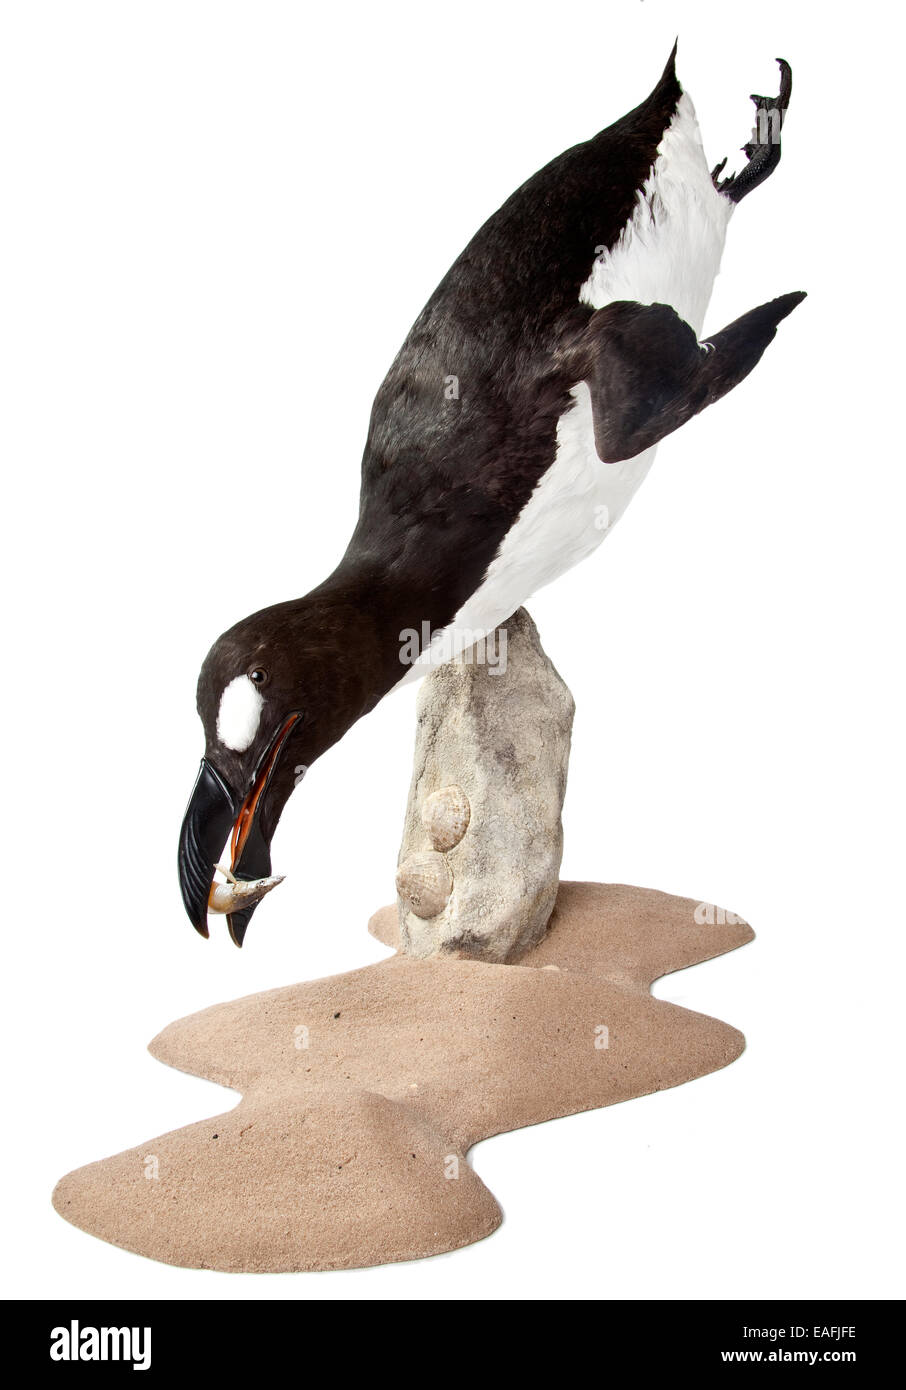 Pinguinus impennis, Great Auk Stock Photo